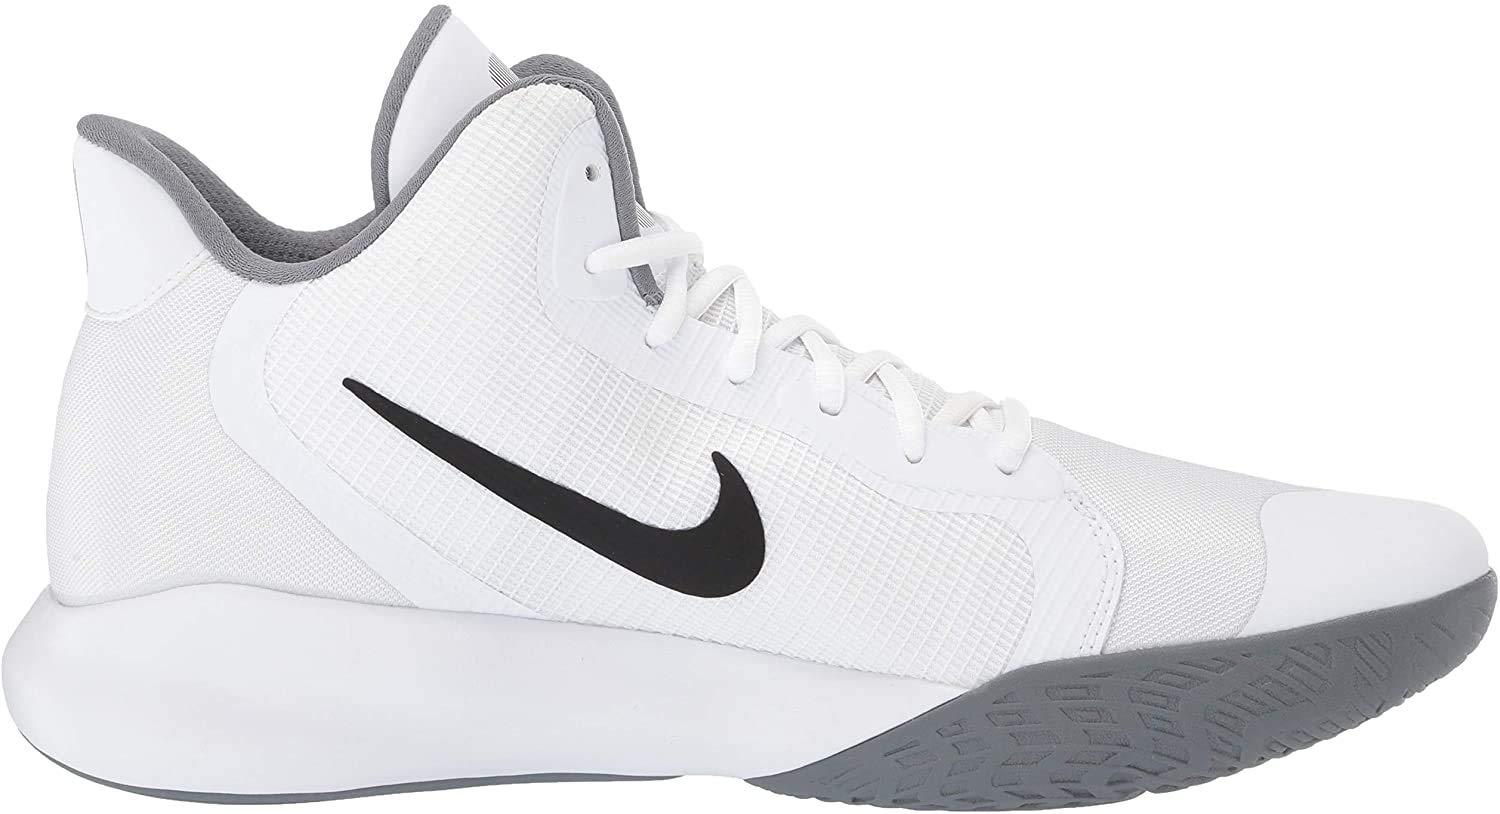 Nike Precision Iii Basketball Shoe in White | Lyst